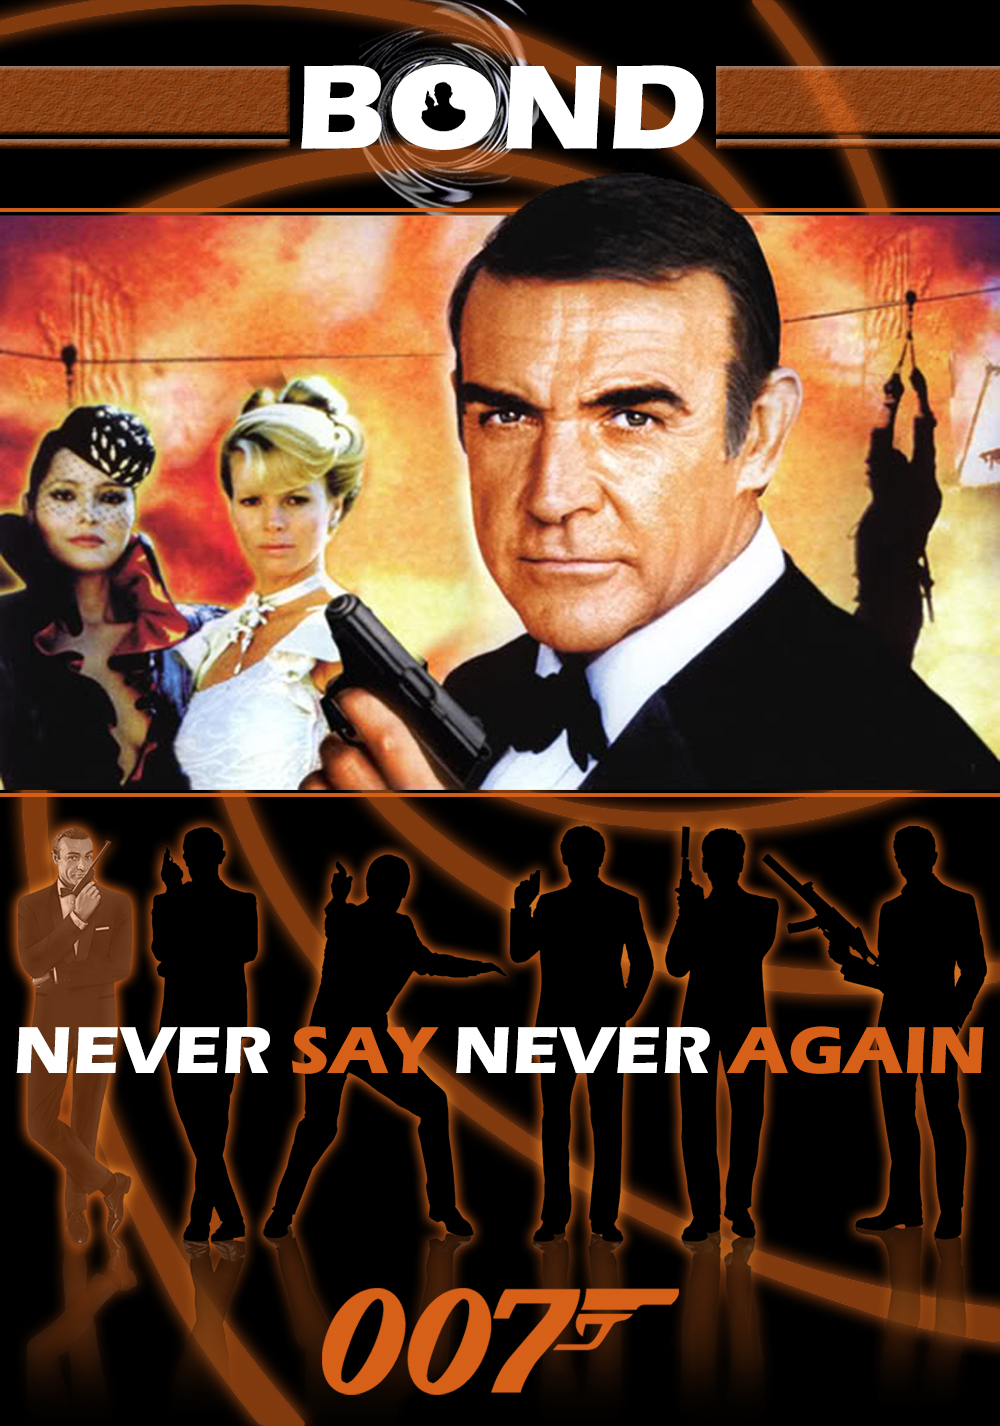 James Bond - Soha ne mondd, hogy soha online